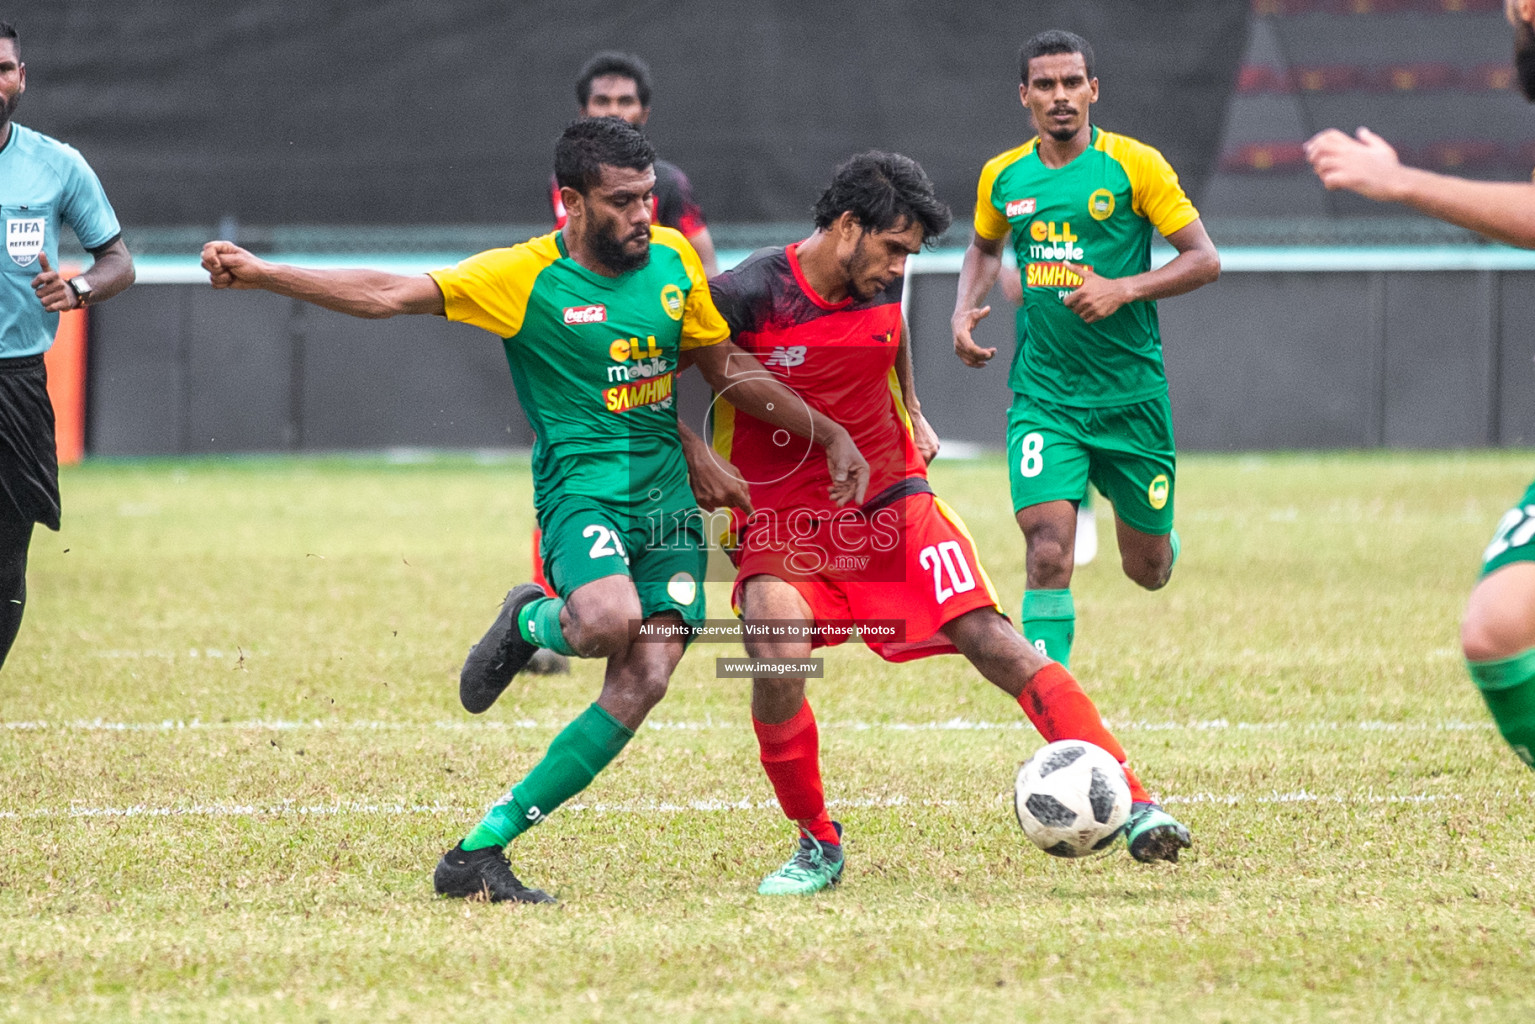 Maziya vs Da Grande SC in Dhiraagu Dhivehi Premier League 2019/2020 held in Male', Maldives on 24th January 2020 Photos: Suadh Abdul Sattar /images.mv